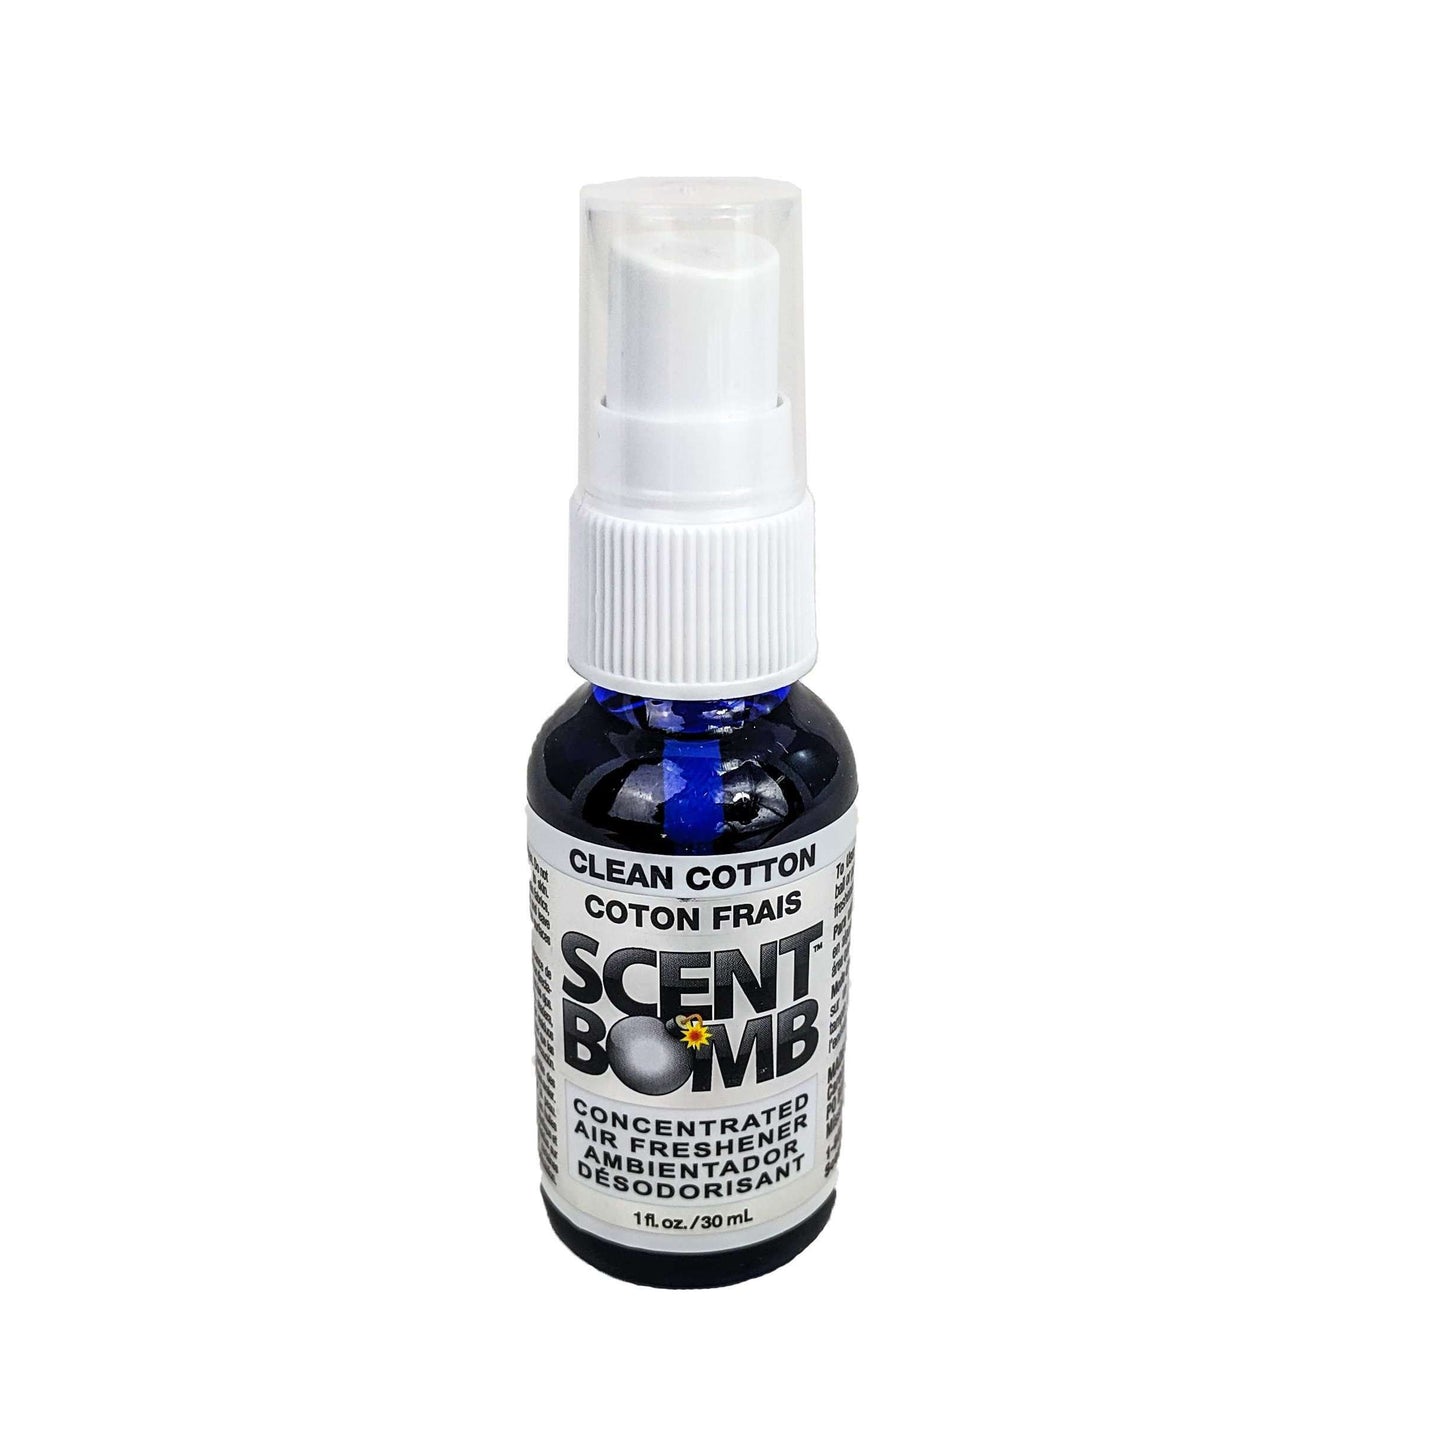 Scent Bomb Air Freshener Spray - 1OZ - Clean Cotton Scent